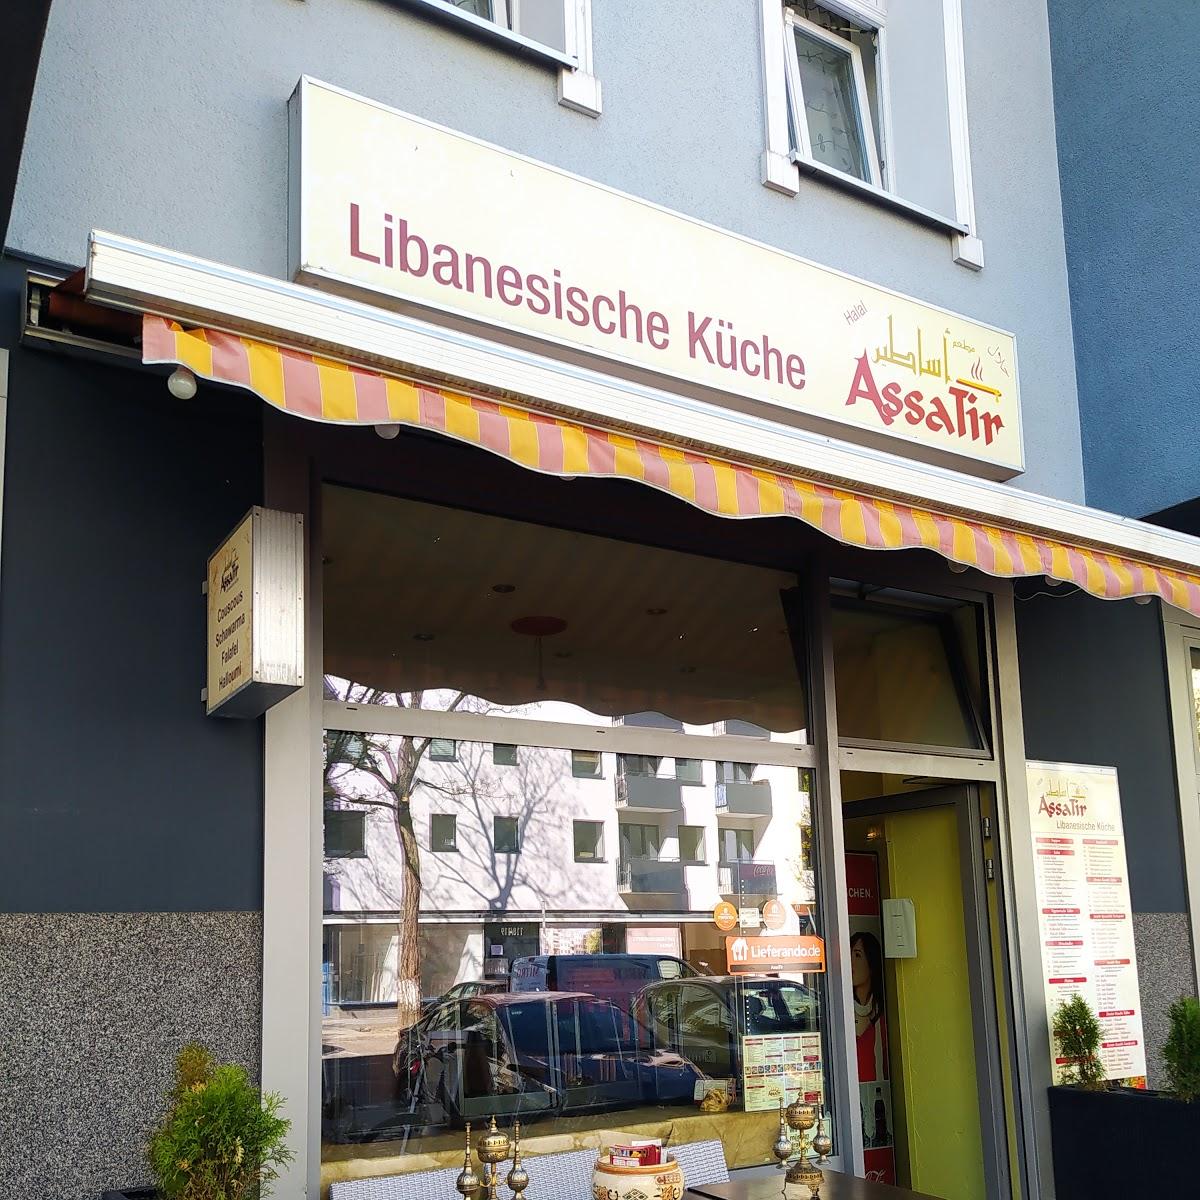 Restaurant "Assatir Restaurant" in Berlin